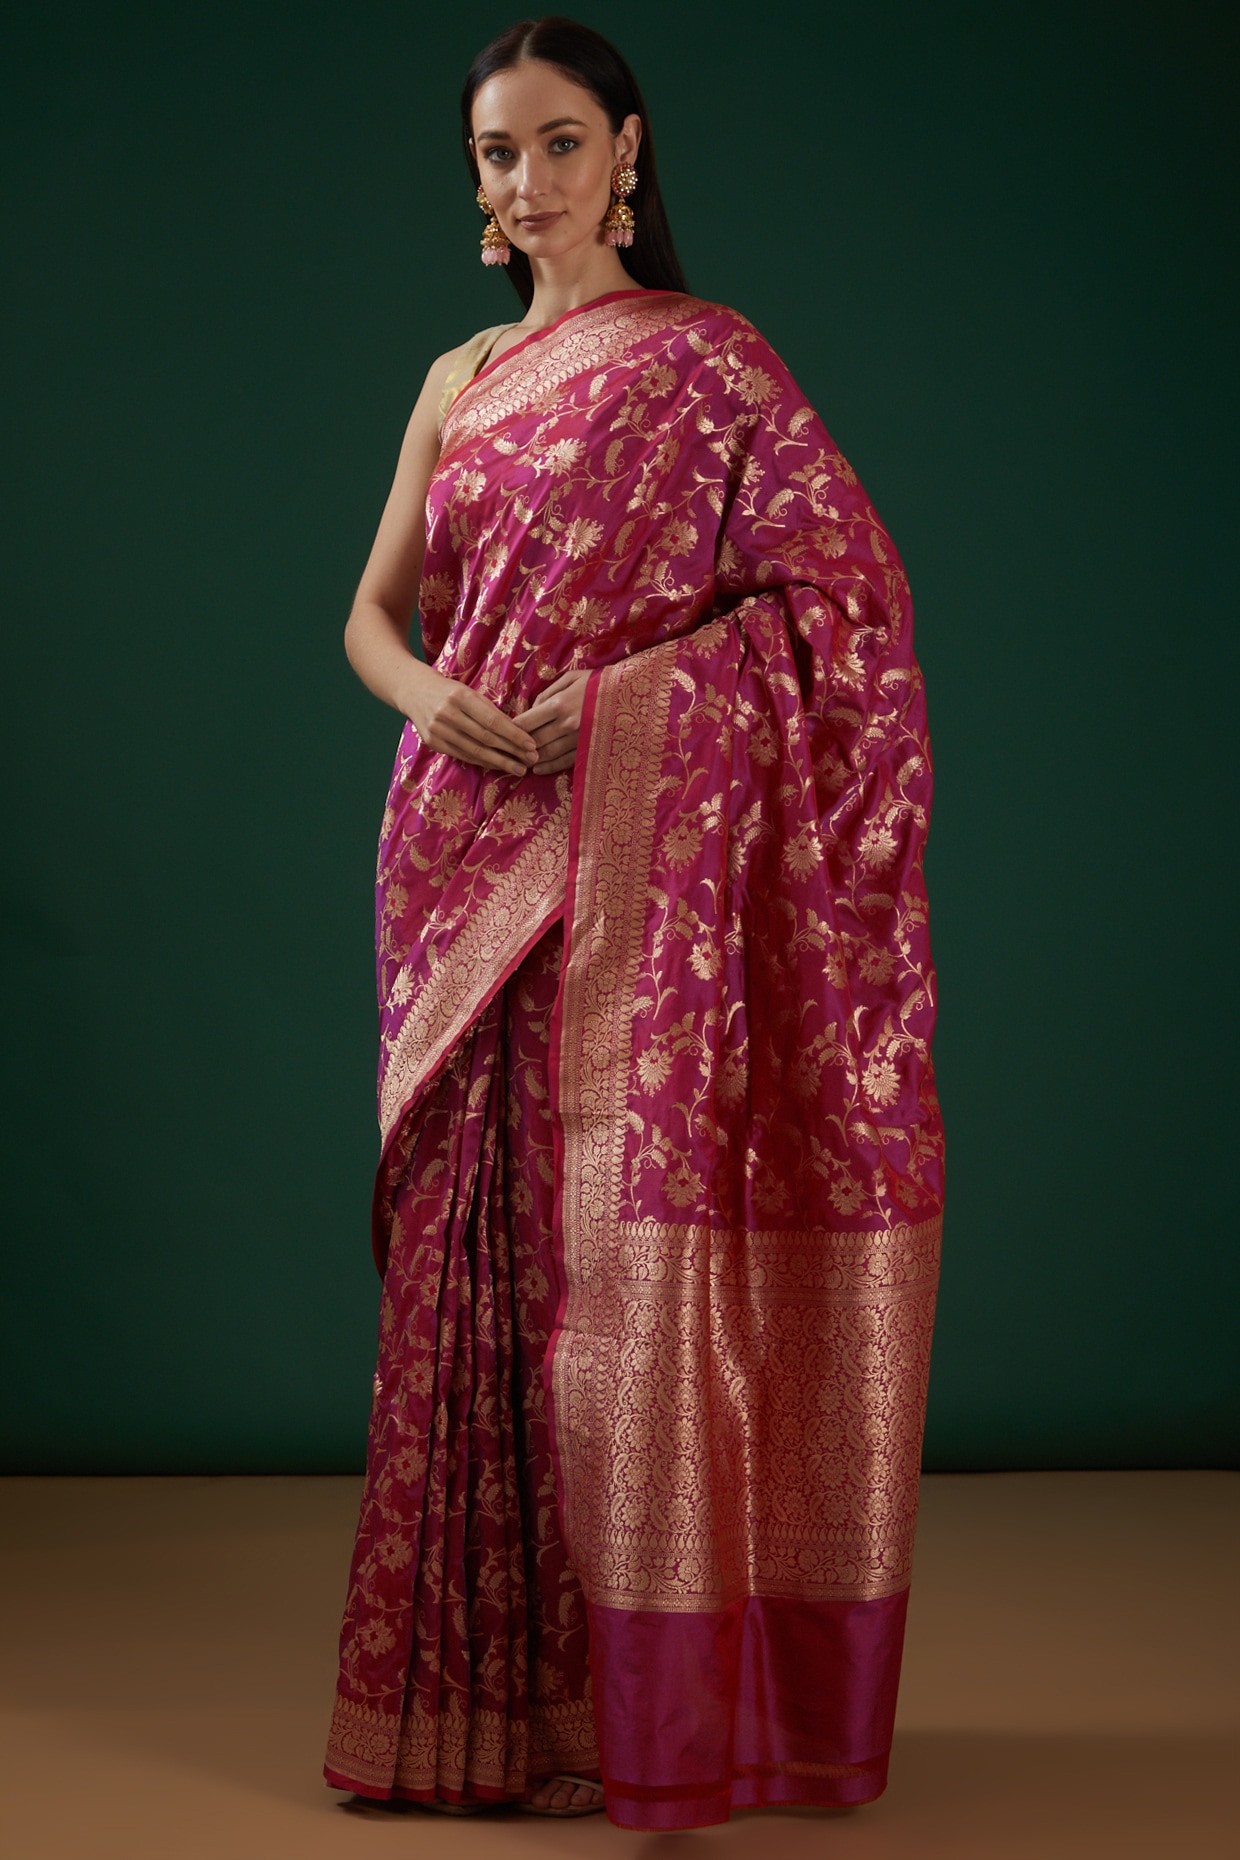 Pink and Green Banarasi Saree, Indian Wedding Saree, South Indian Style,  Handloom Silk, Gifts for Her, Traditional Event Saree - Etsy